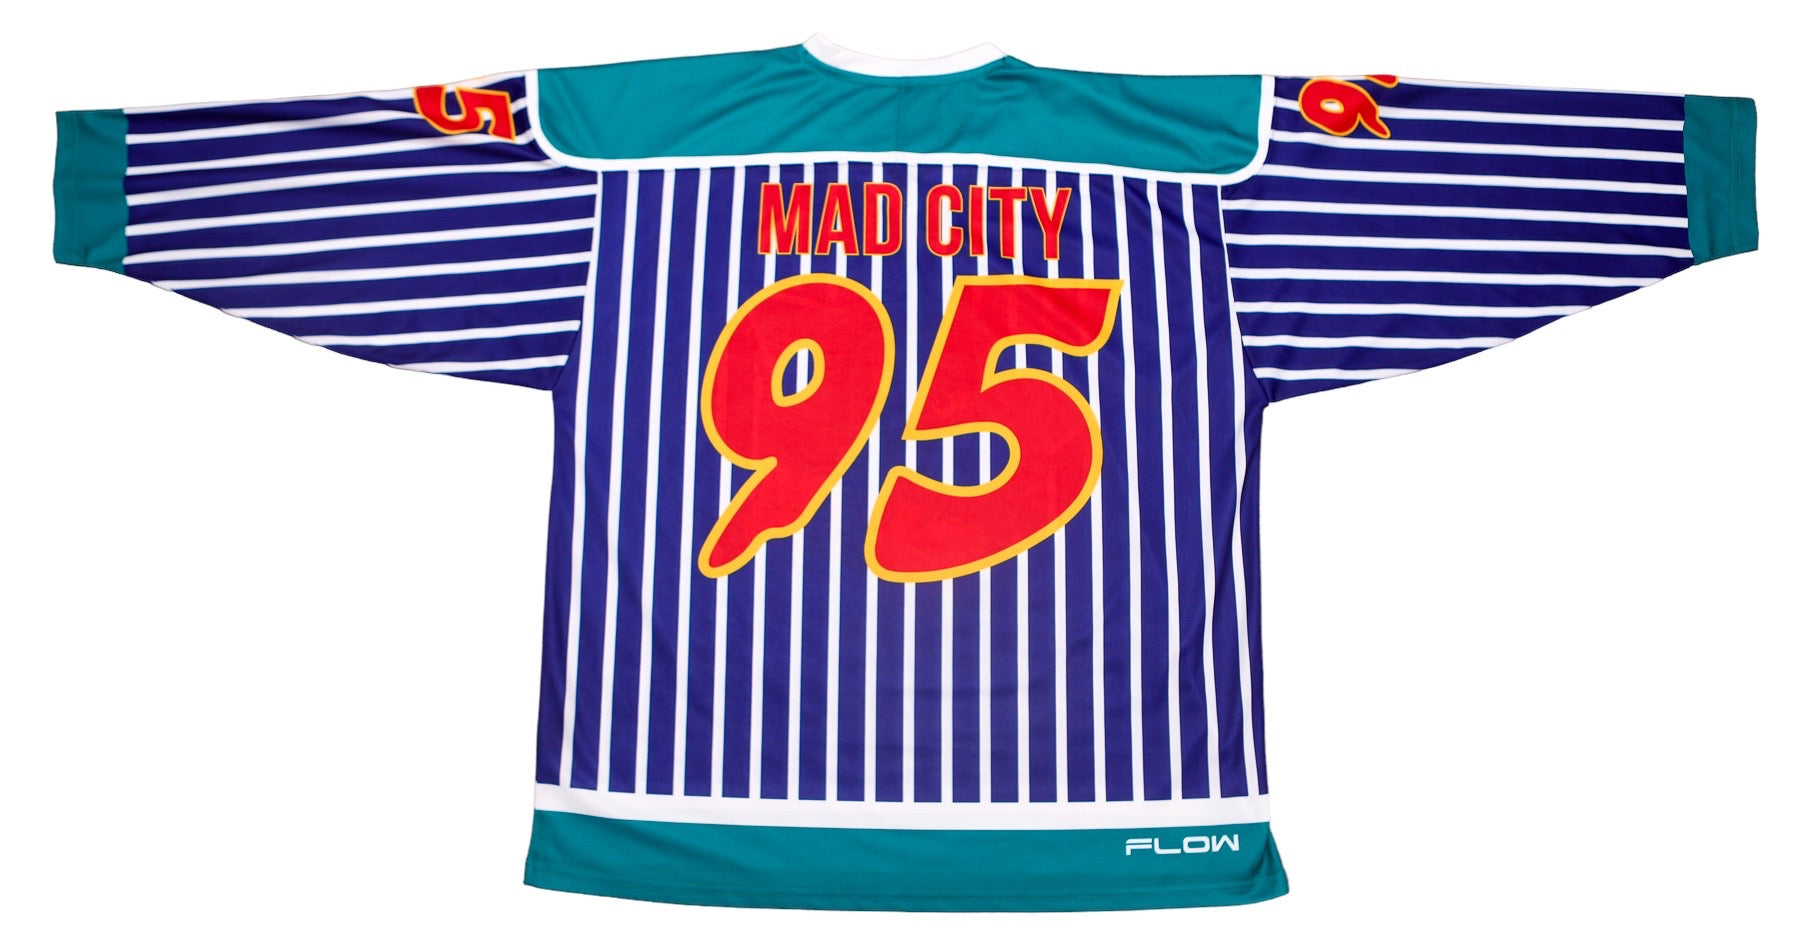 NHL Florida Panthers Custom Name Number 90s Throwback Vintage Away Jersey T- Shirt